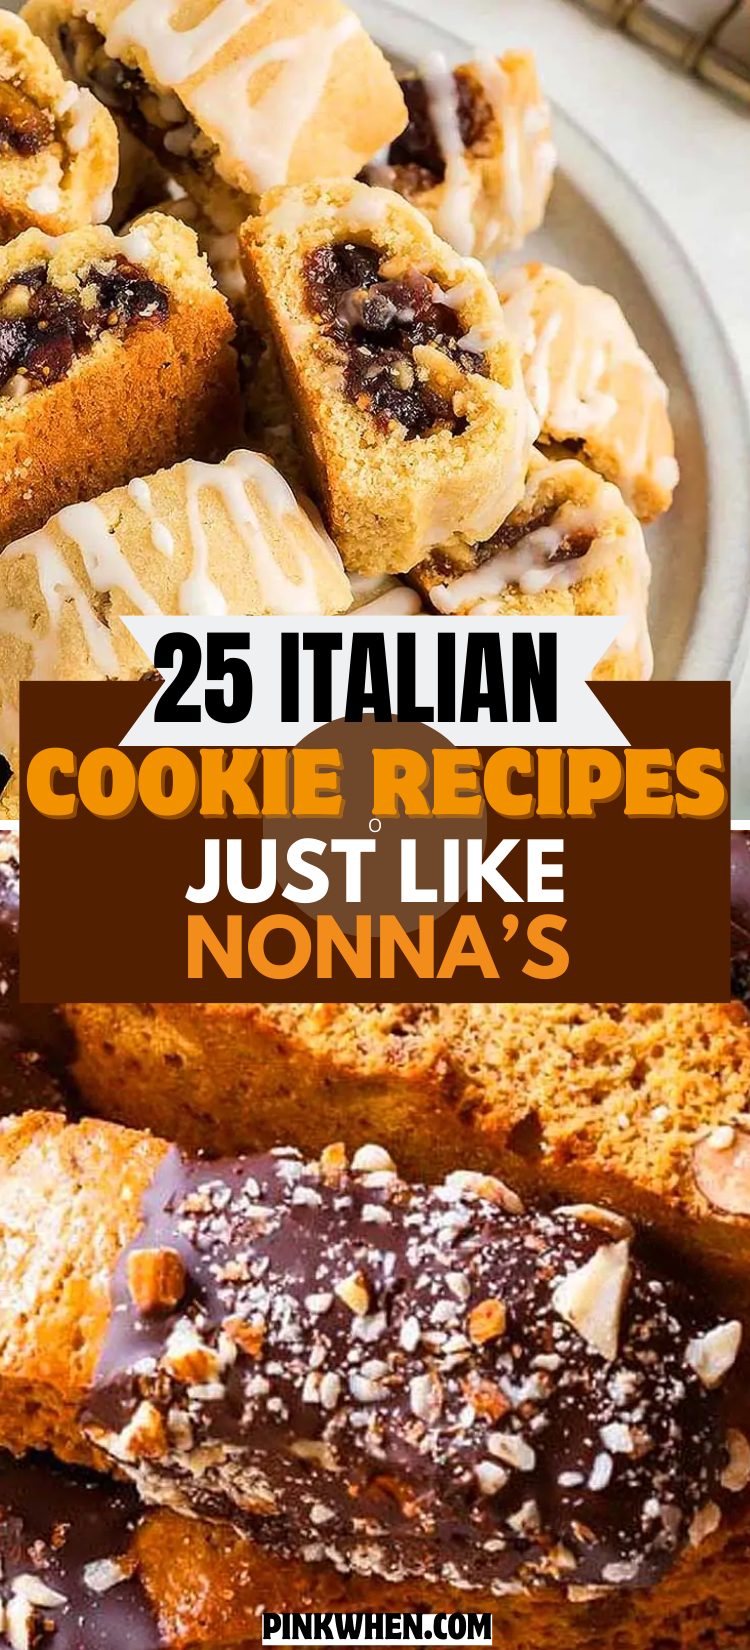 25 Italian Cookie Recipes Just Like Nonna’s